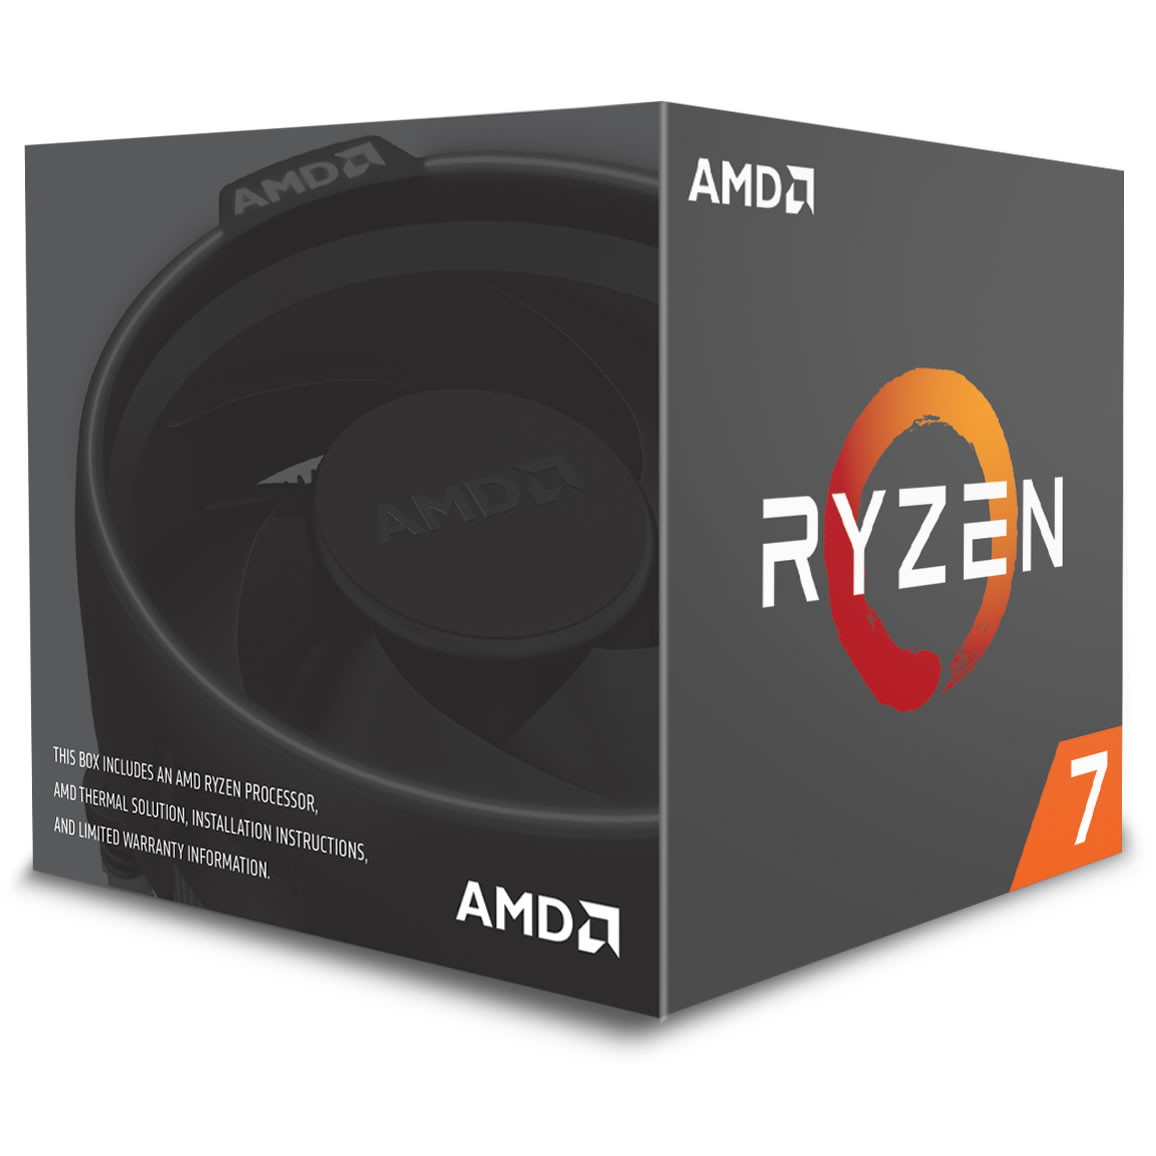 AMD - AMD Ryzen 7 Eight Core 1700X 3.80GHz (Socket AM4) Processor - Retail